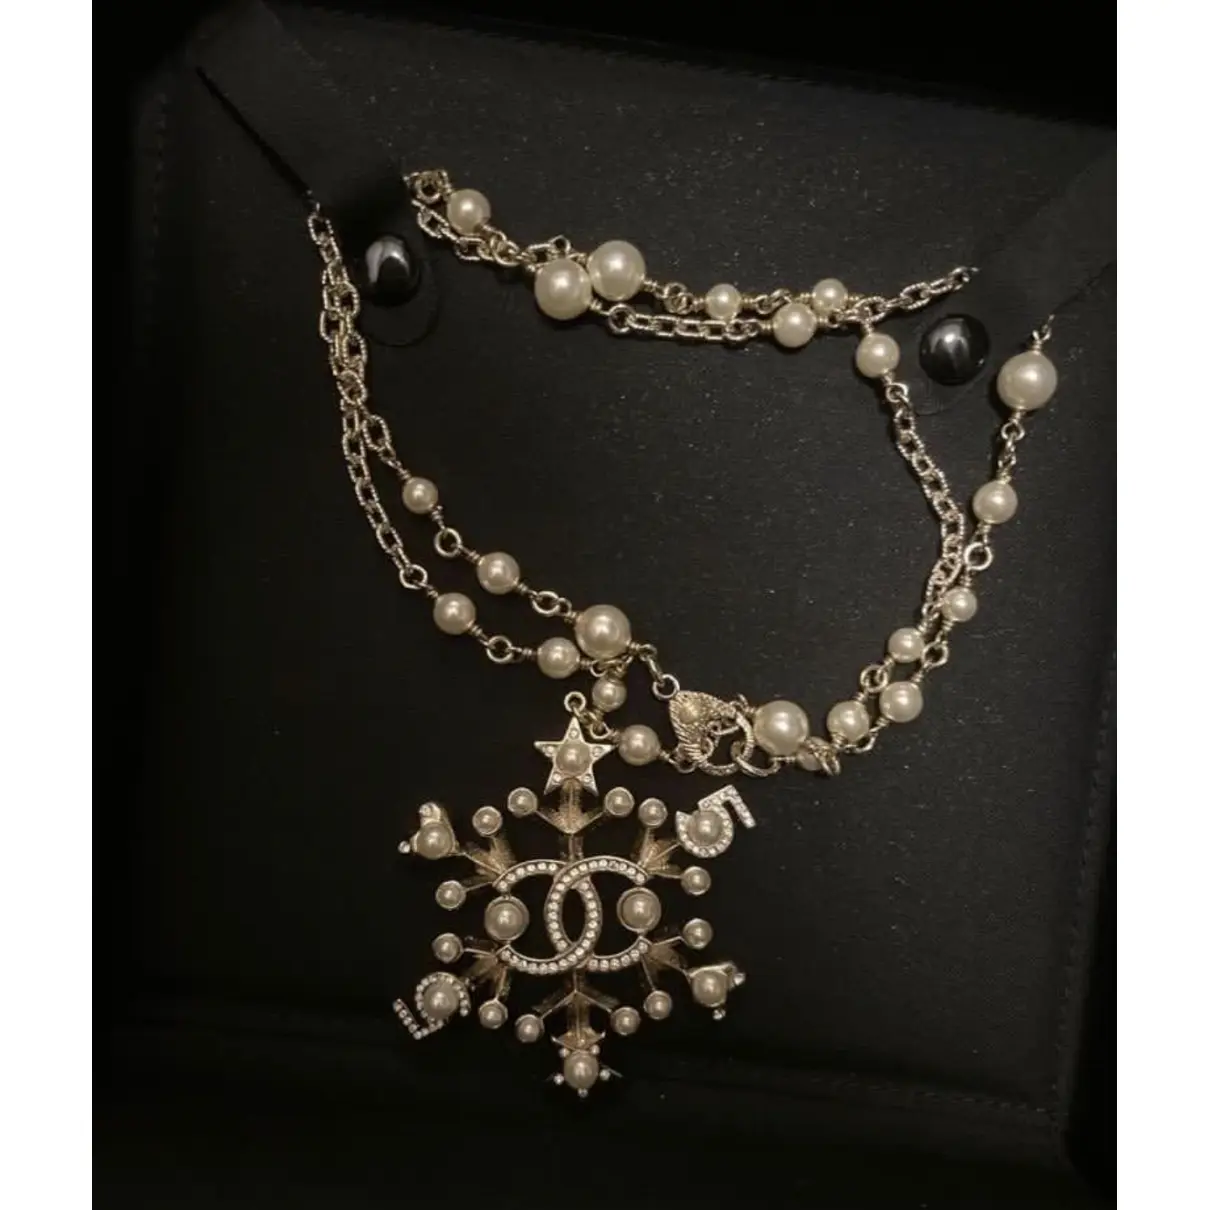 CC necklace Chanel